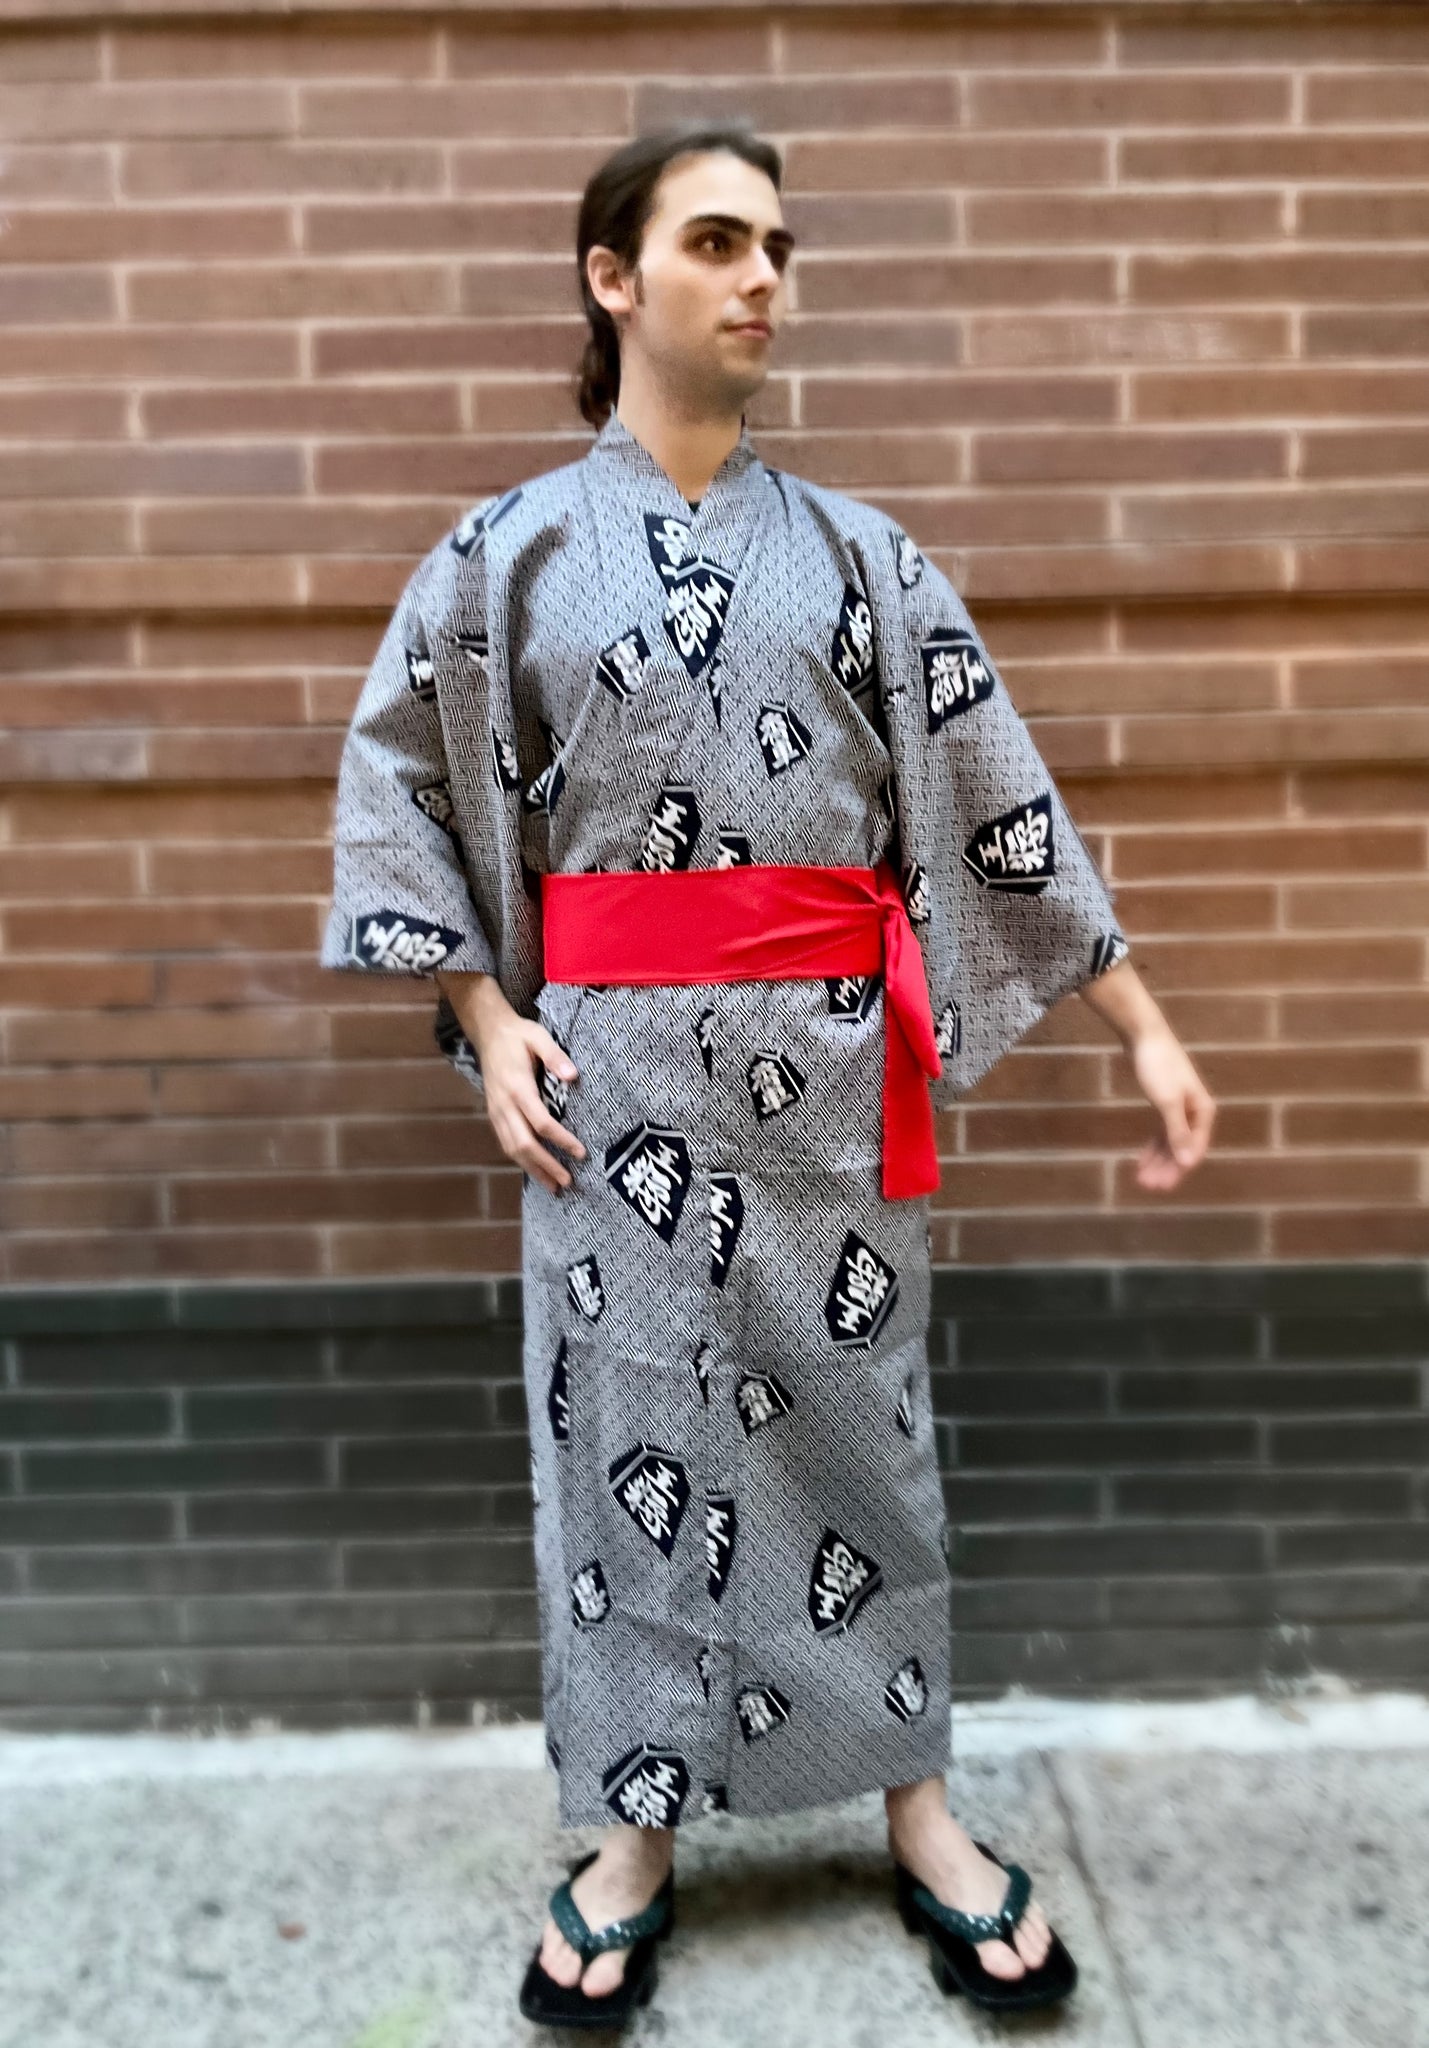 Kimono Sleeve Robe - navy/white Japanese chess design on weave